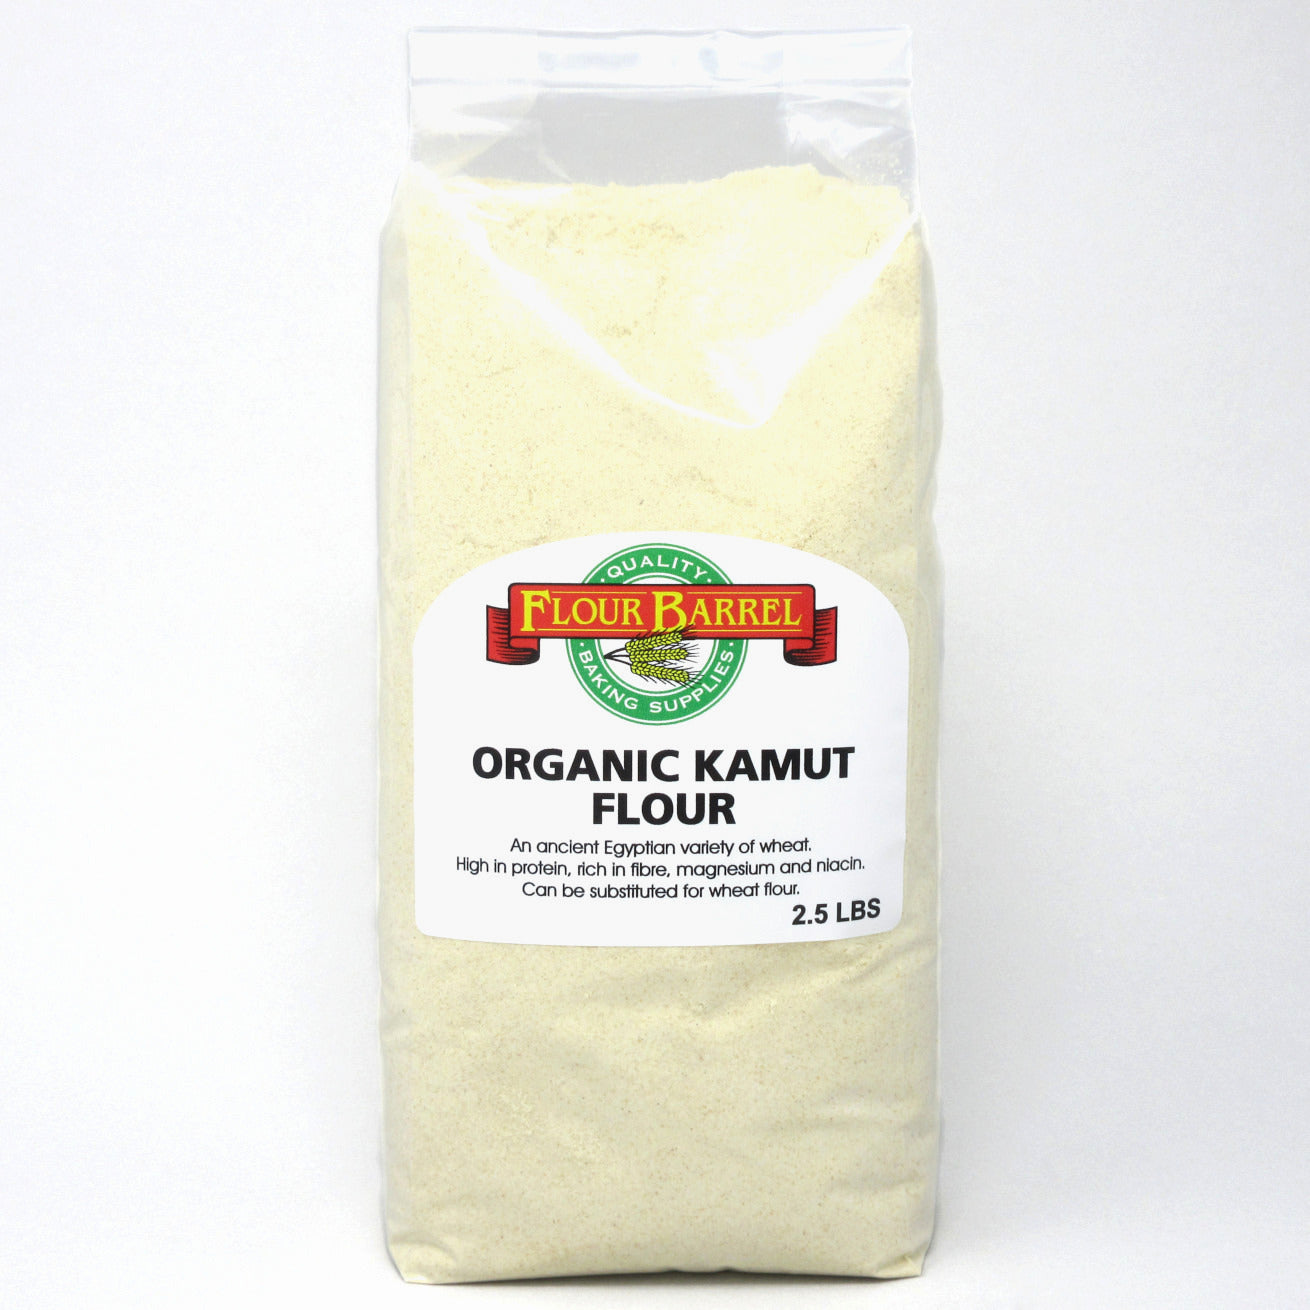 Flour Barrel product image - Organic Kamut Flour